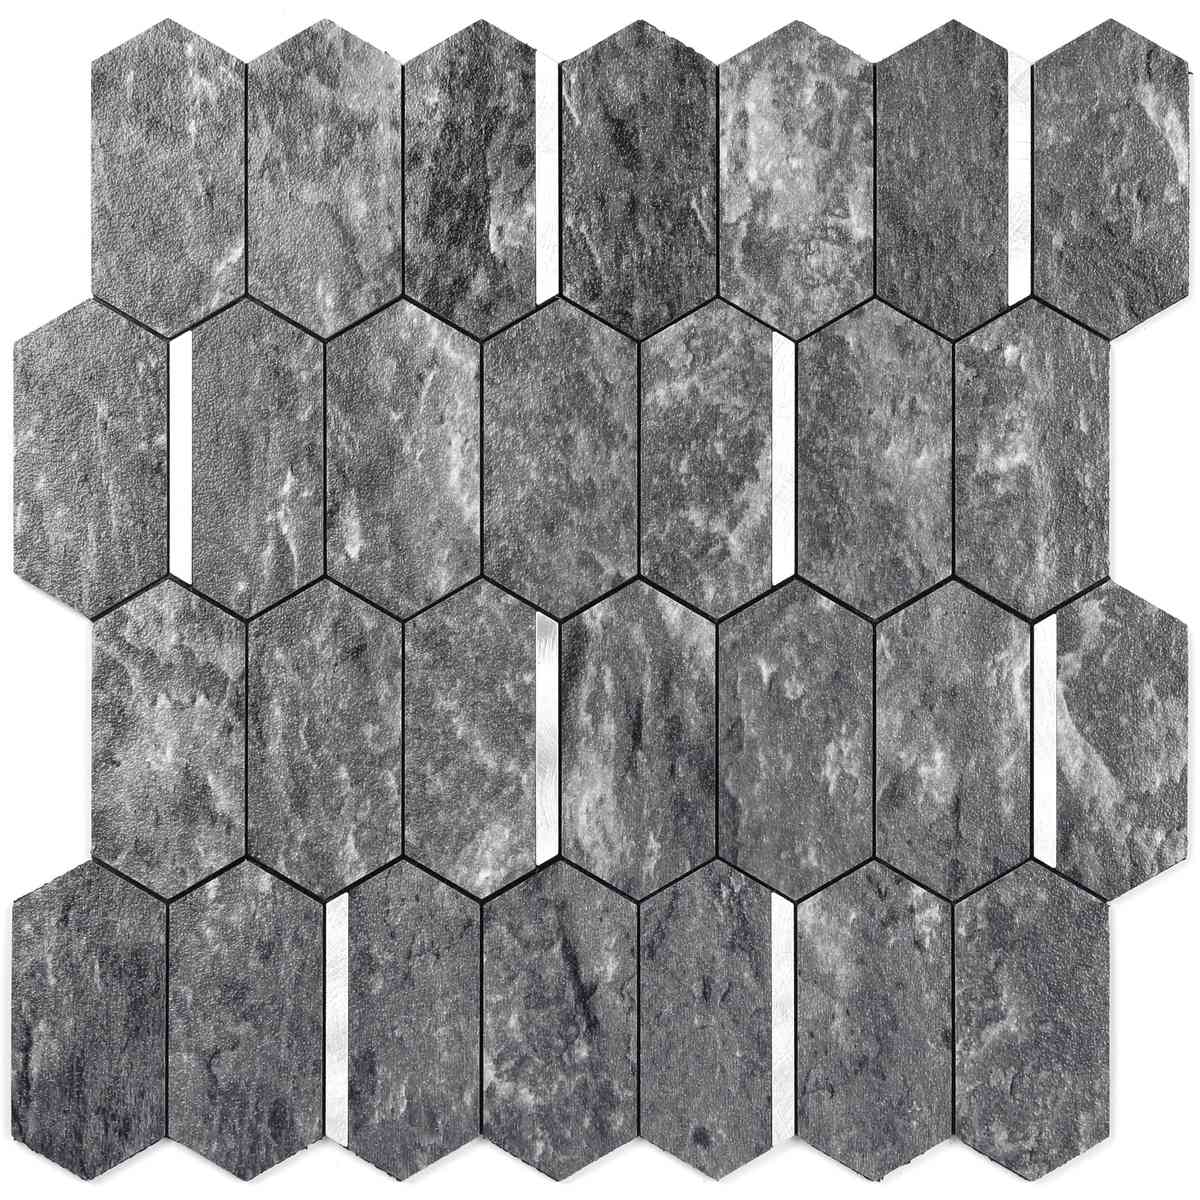 Hexagon mosaic  wall tiles design